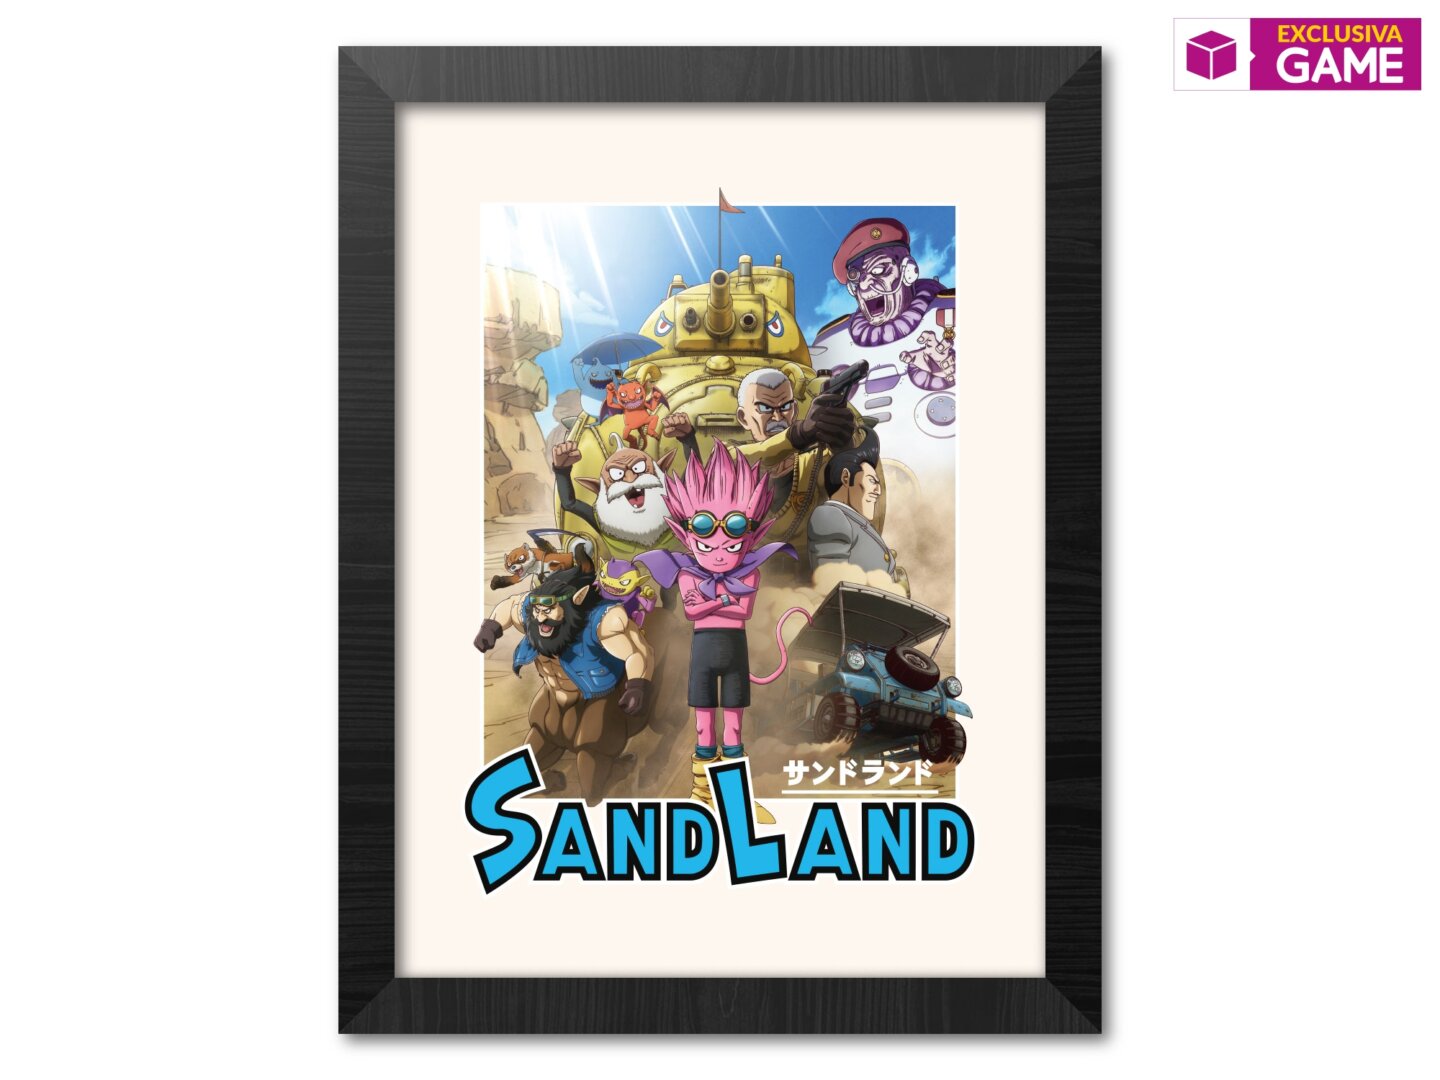 PRINT ENMARCADO SAND LAND Exclusivo GAME